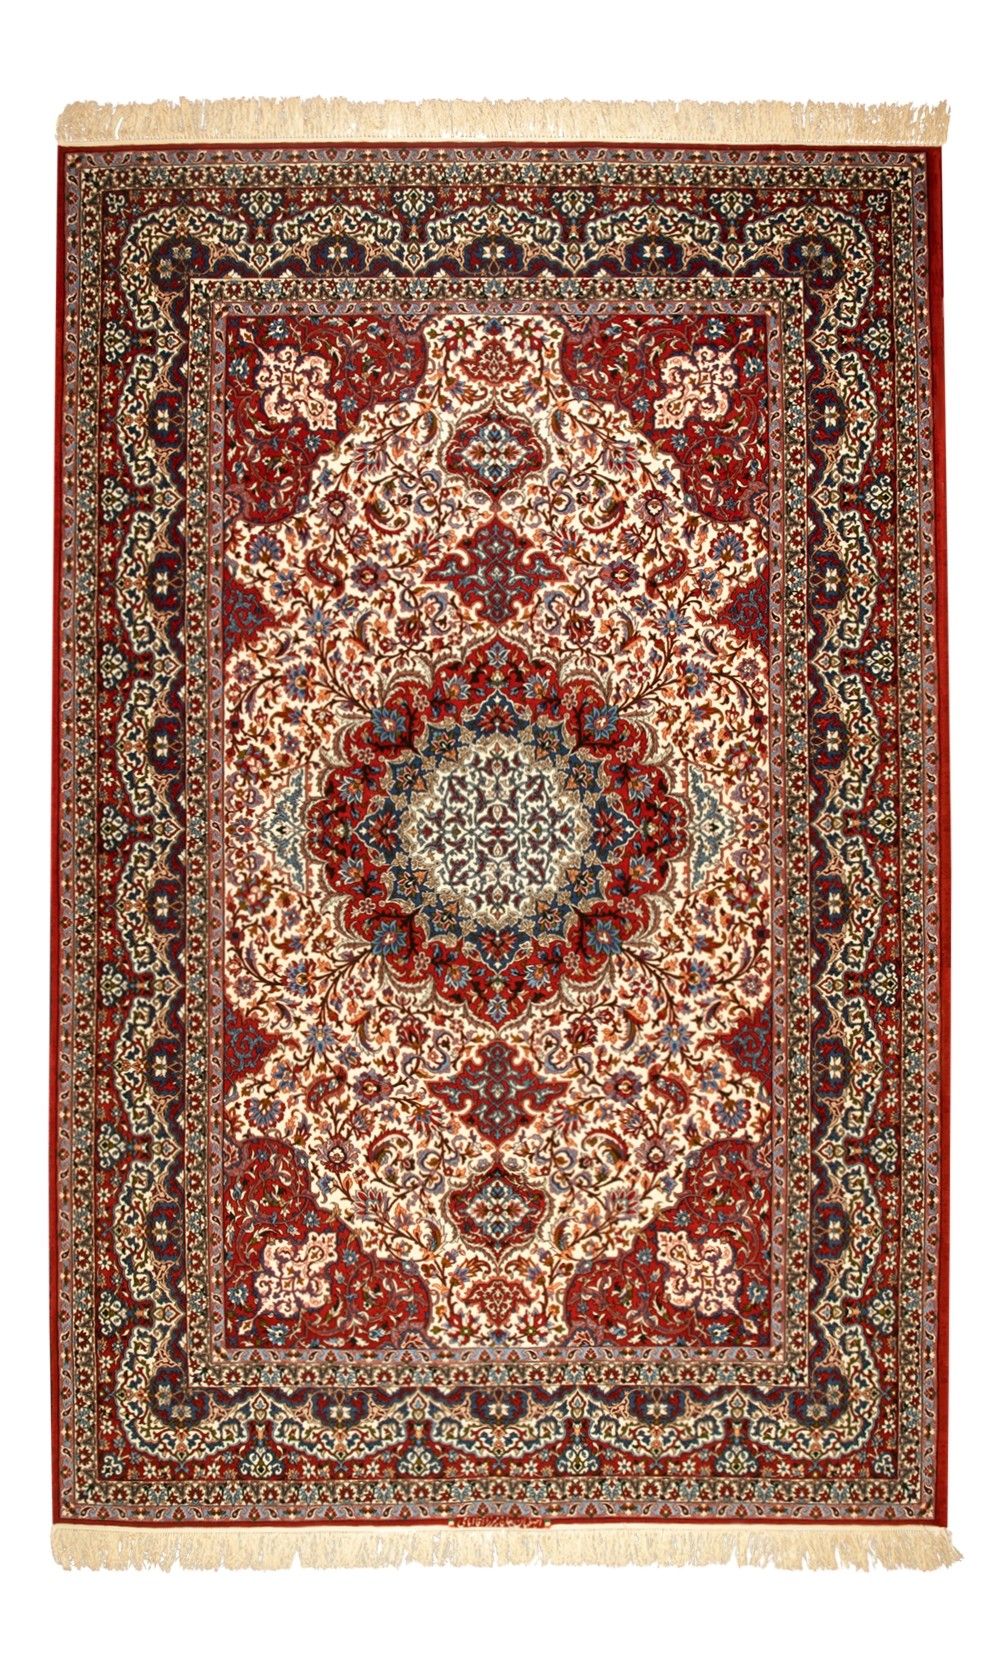 Handmade SUPER FINE WOOL Rug in Cream Color Isfahan | 315×204 cm | SHAAH ABBAASY(Palmette flower) Pattern